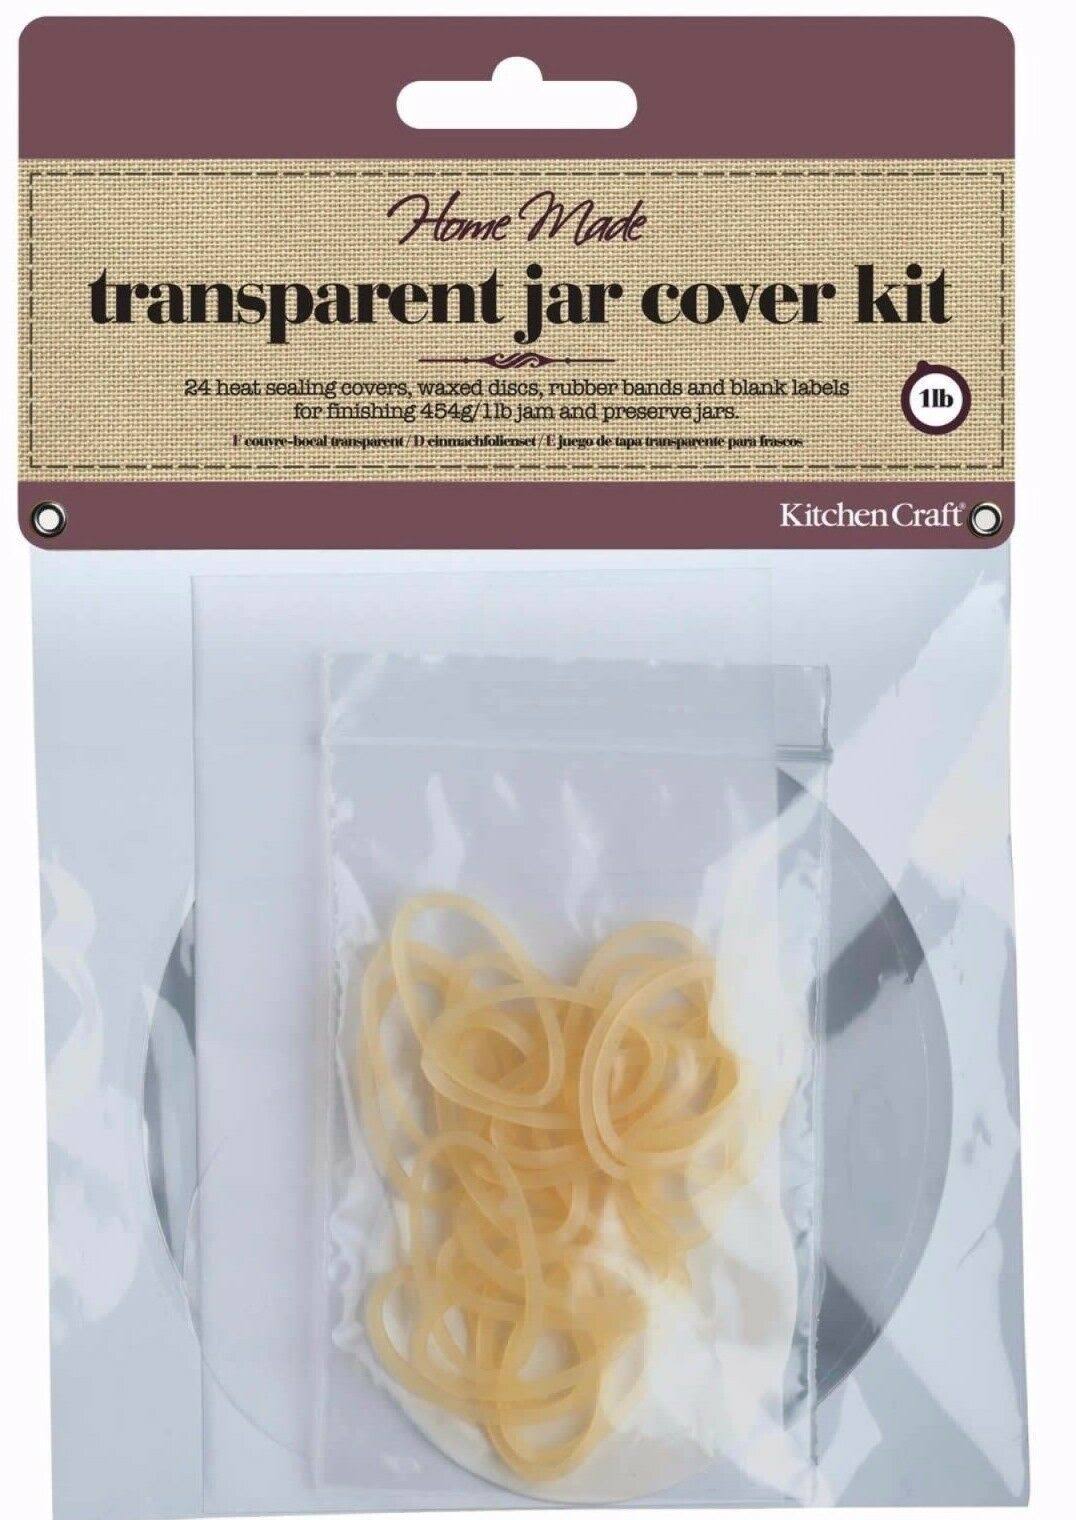 Kitchen Craft Home Made Jam Jar Covers - Transparent, 24 Pack